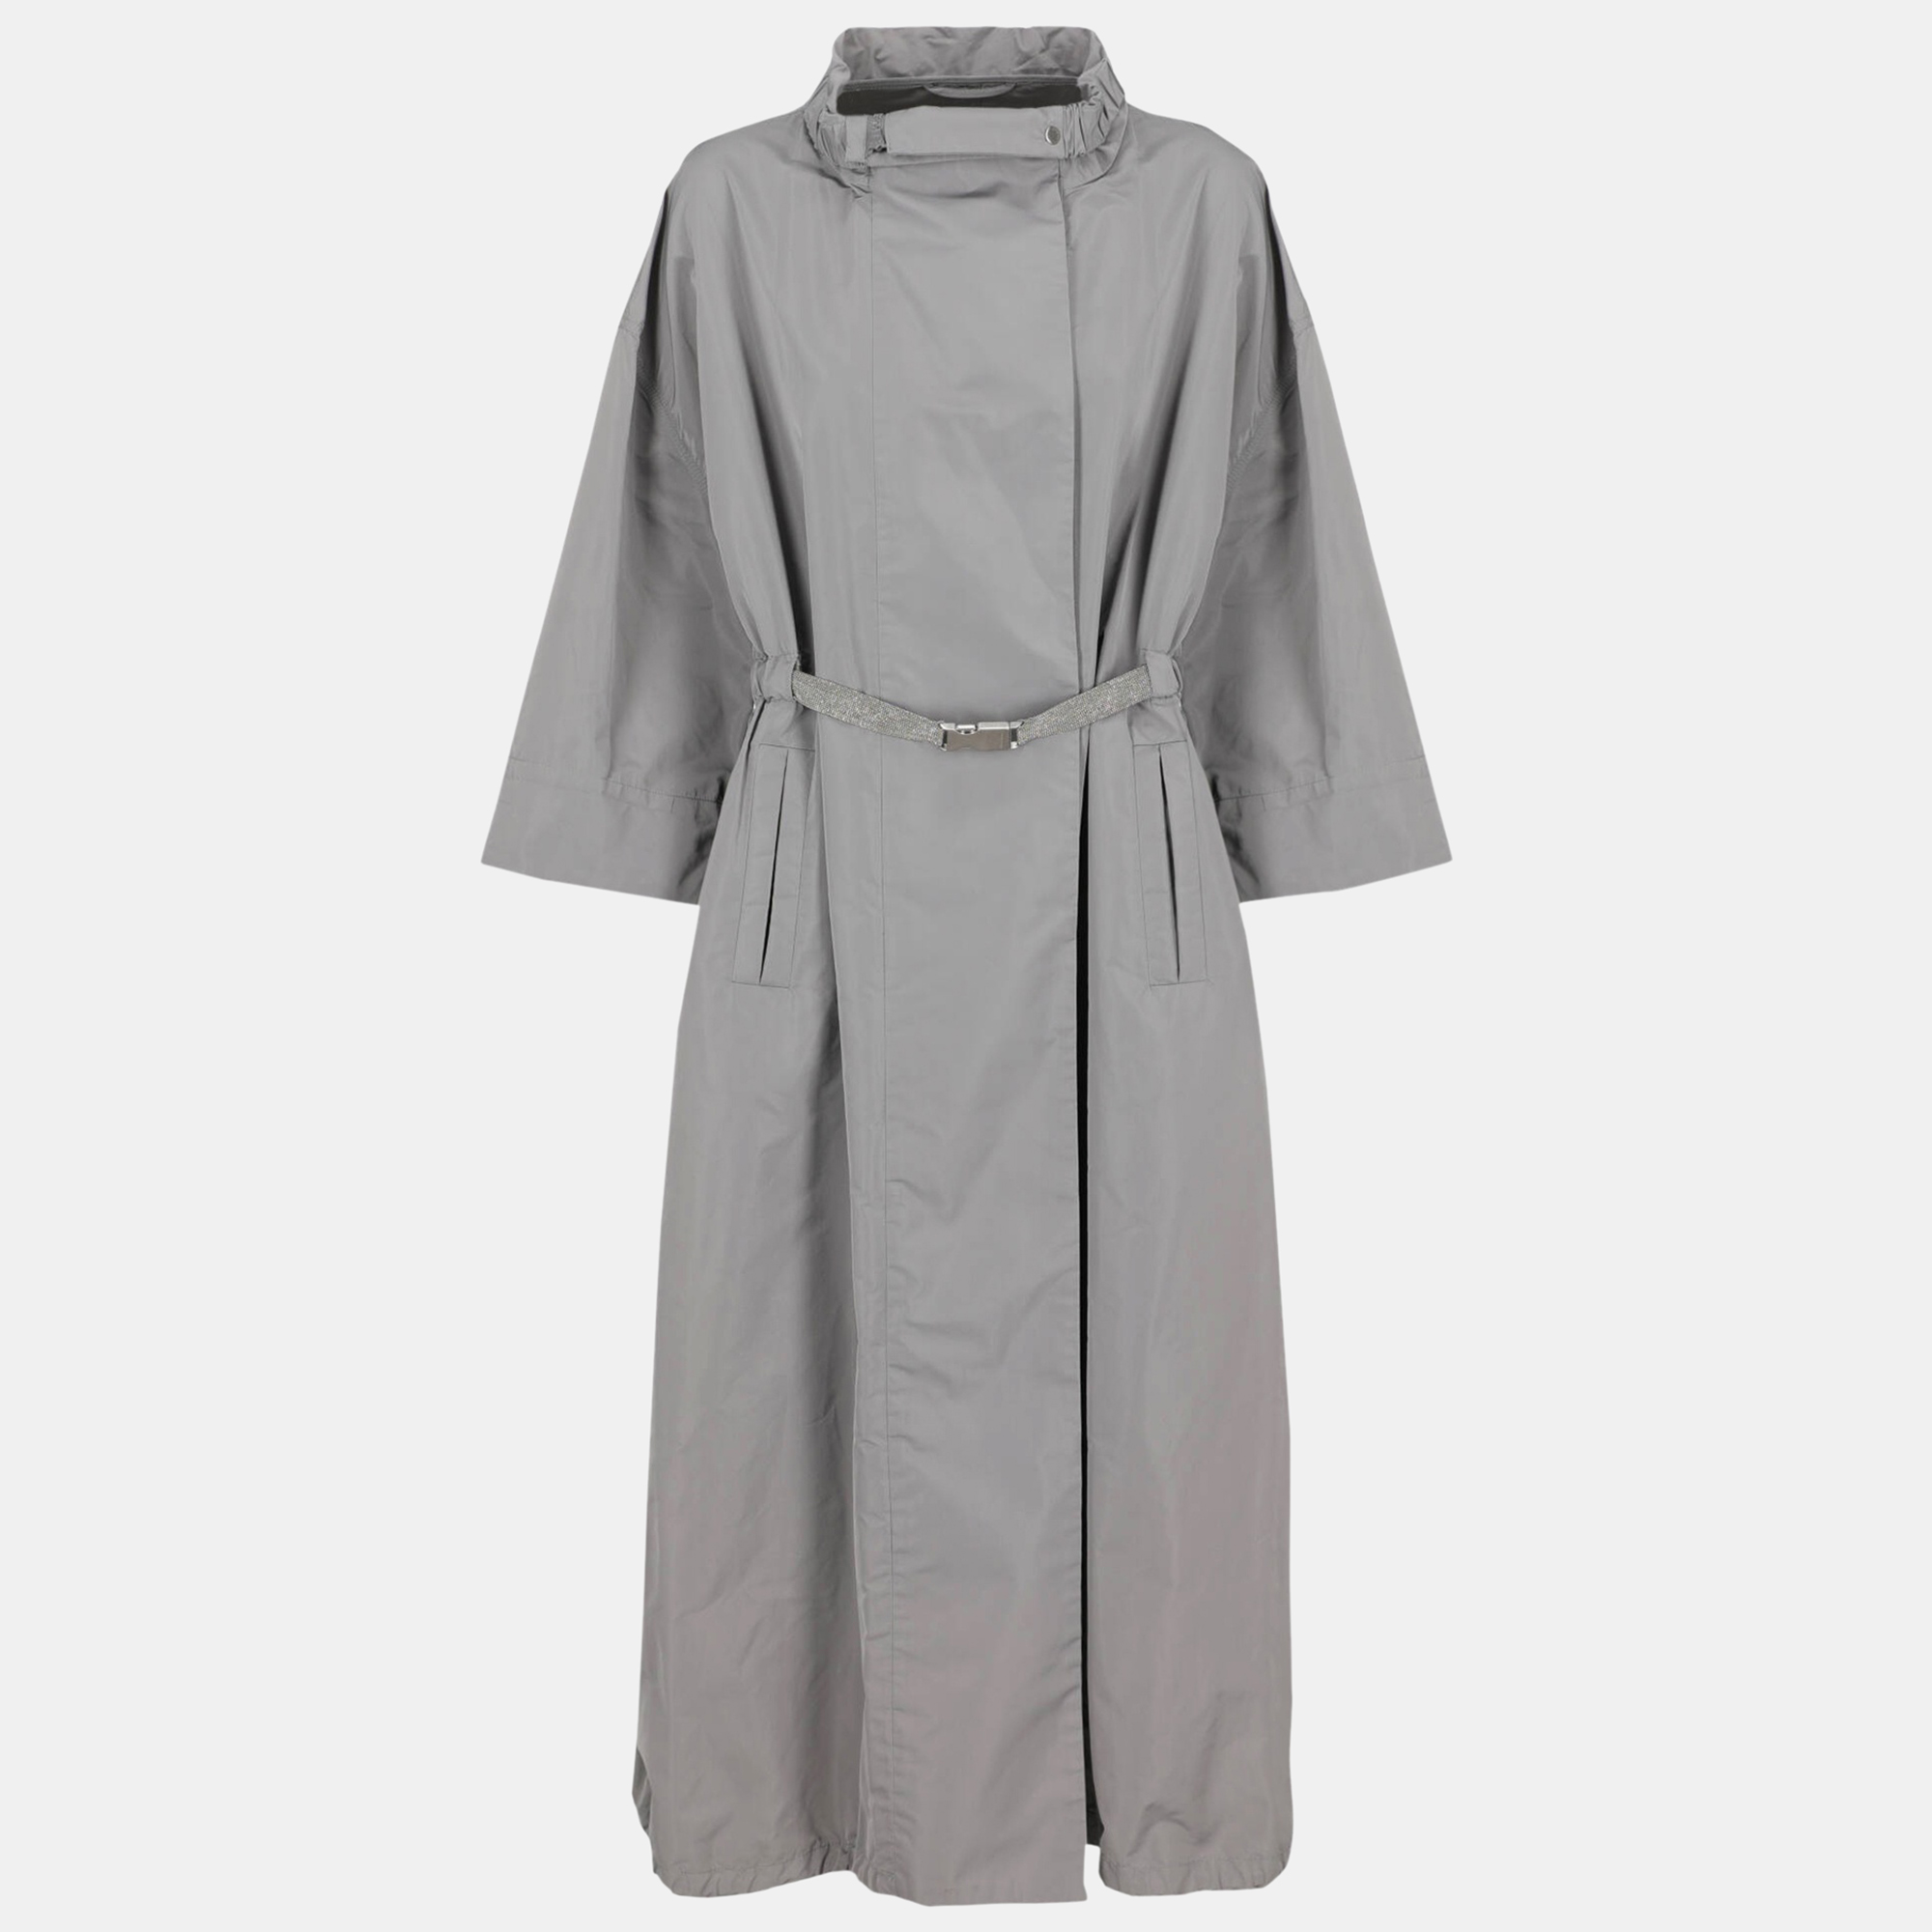 Brunello Cucinelli  Women's Synthetic Fibers Raincoat - Grey - L